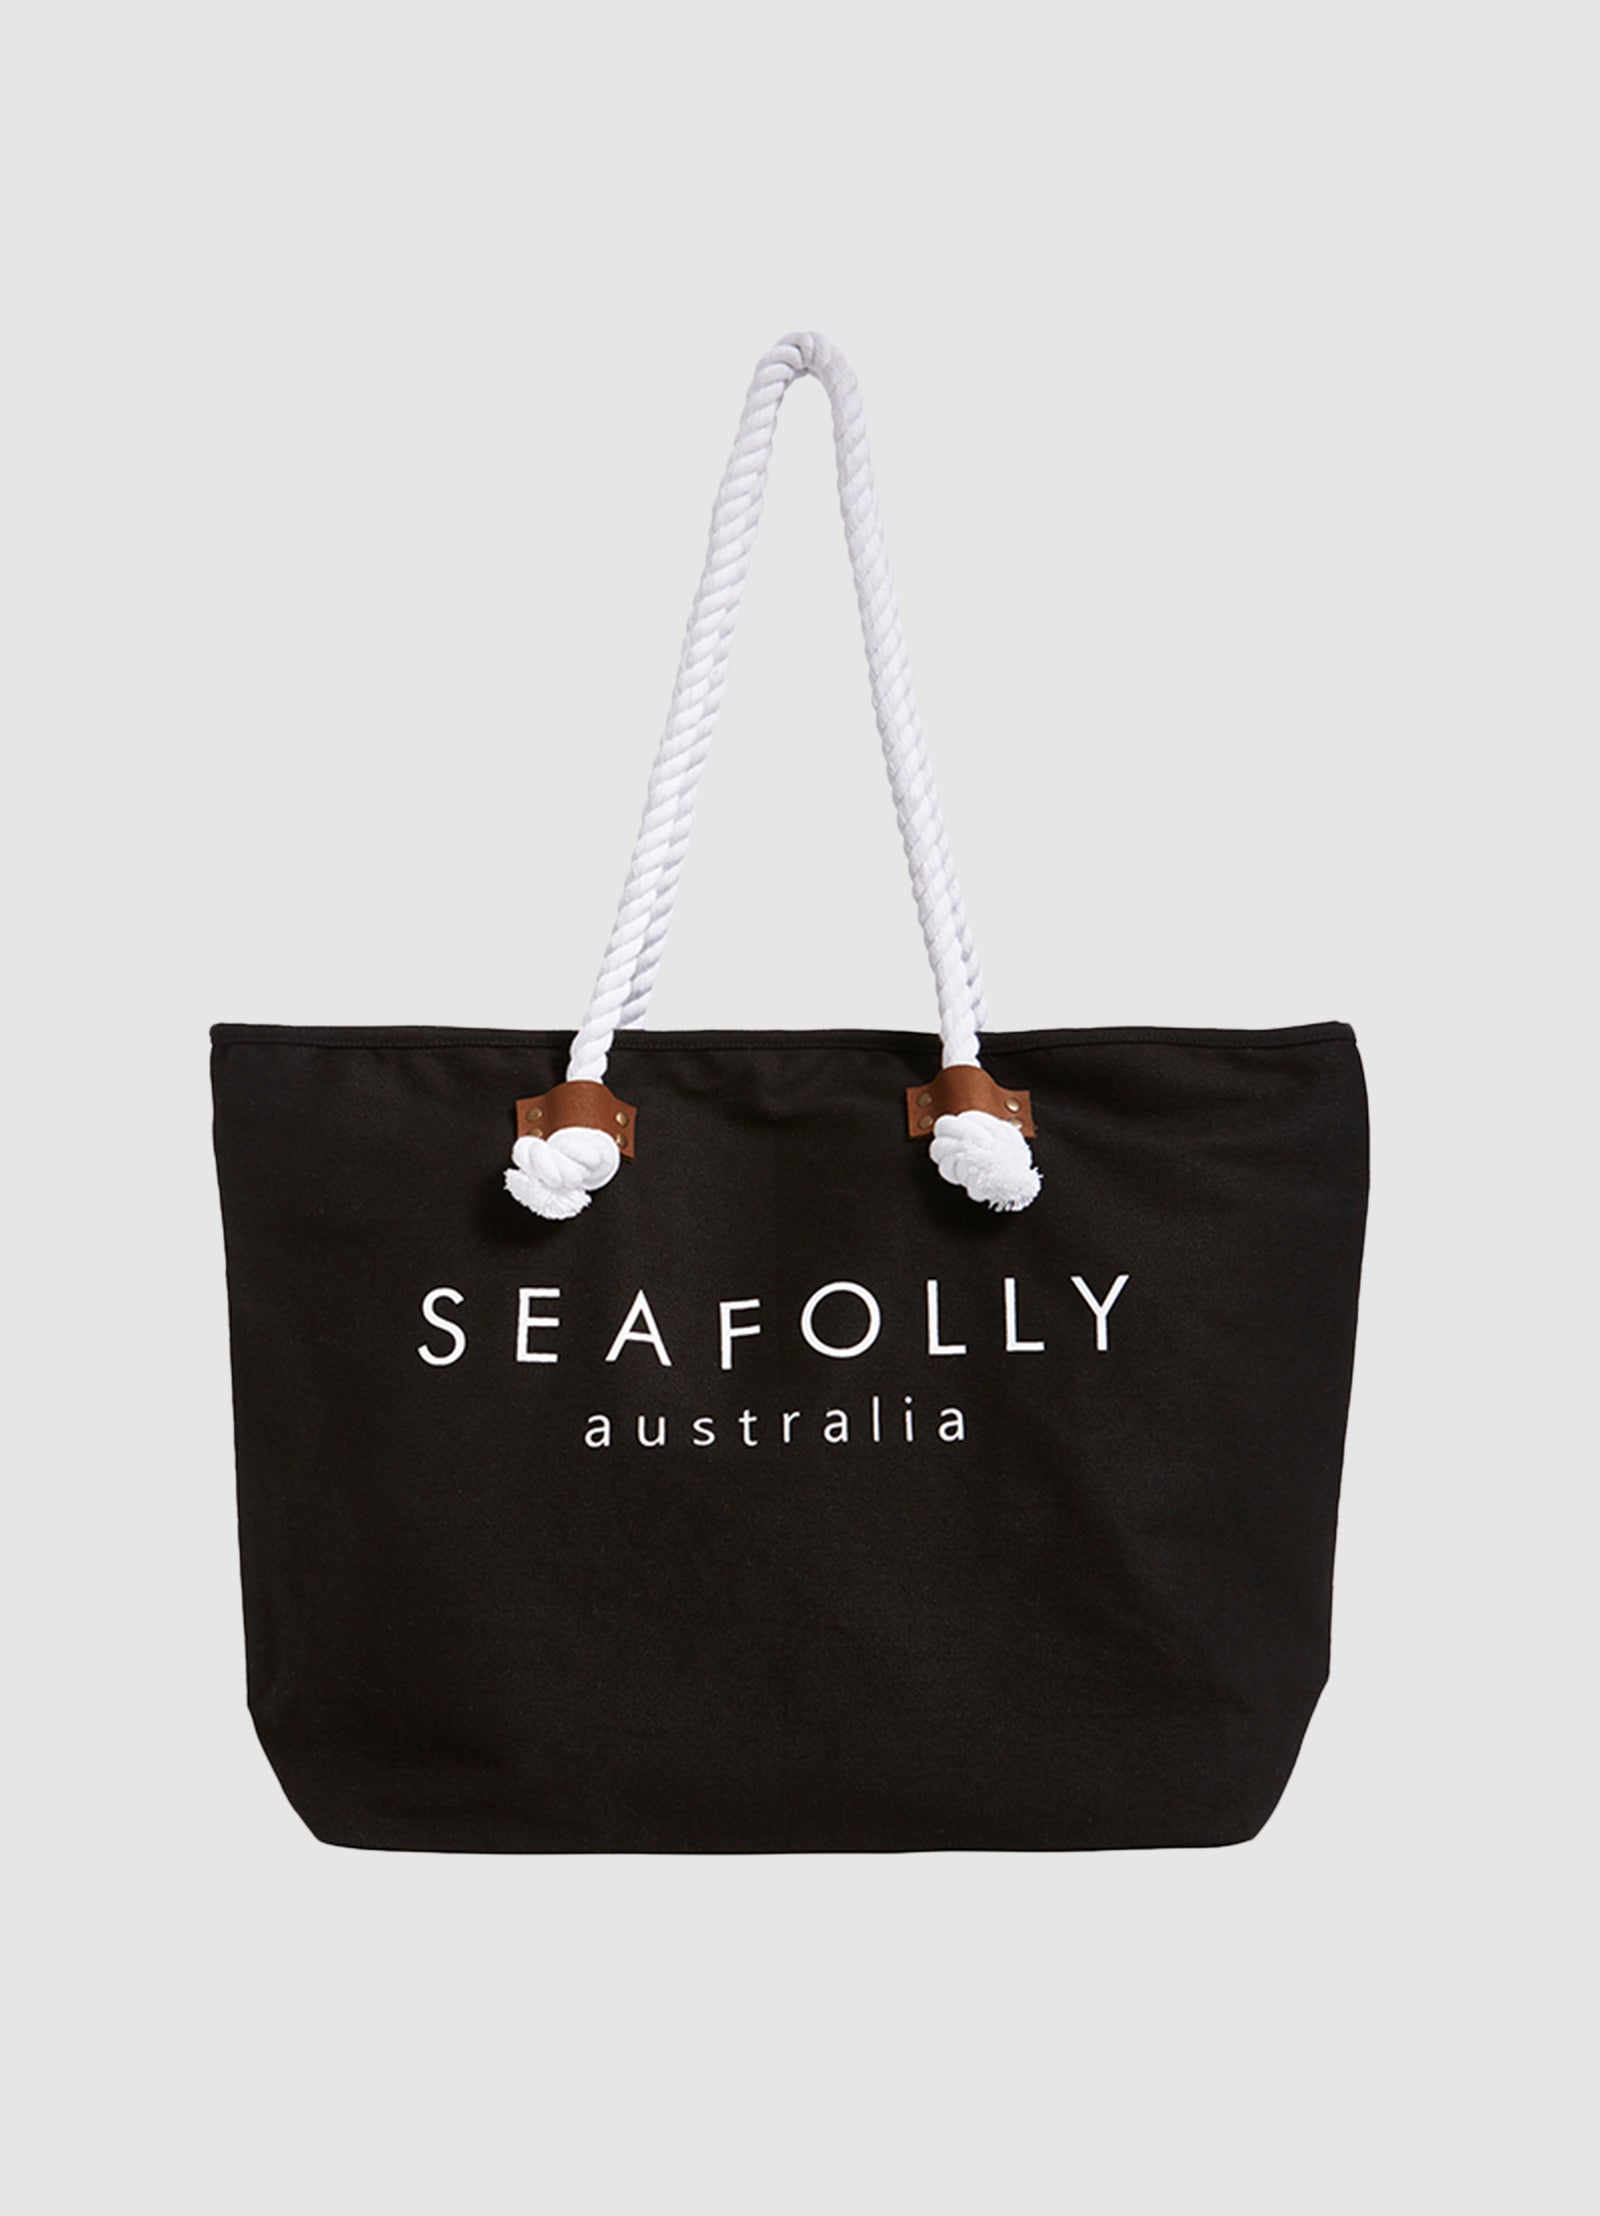 Seafolly Beach Bag and Towel Set | Bags, Pink beach bag, Purses and handbags